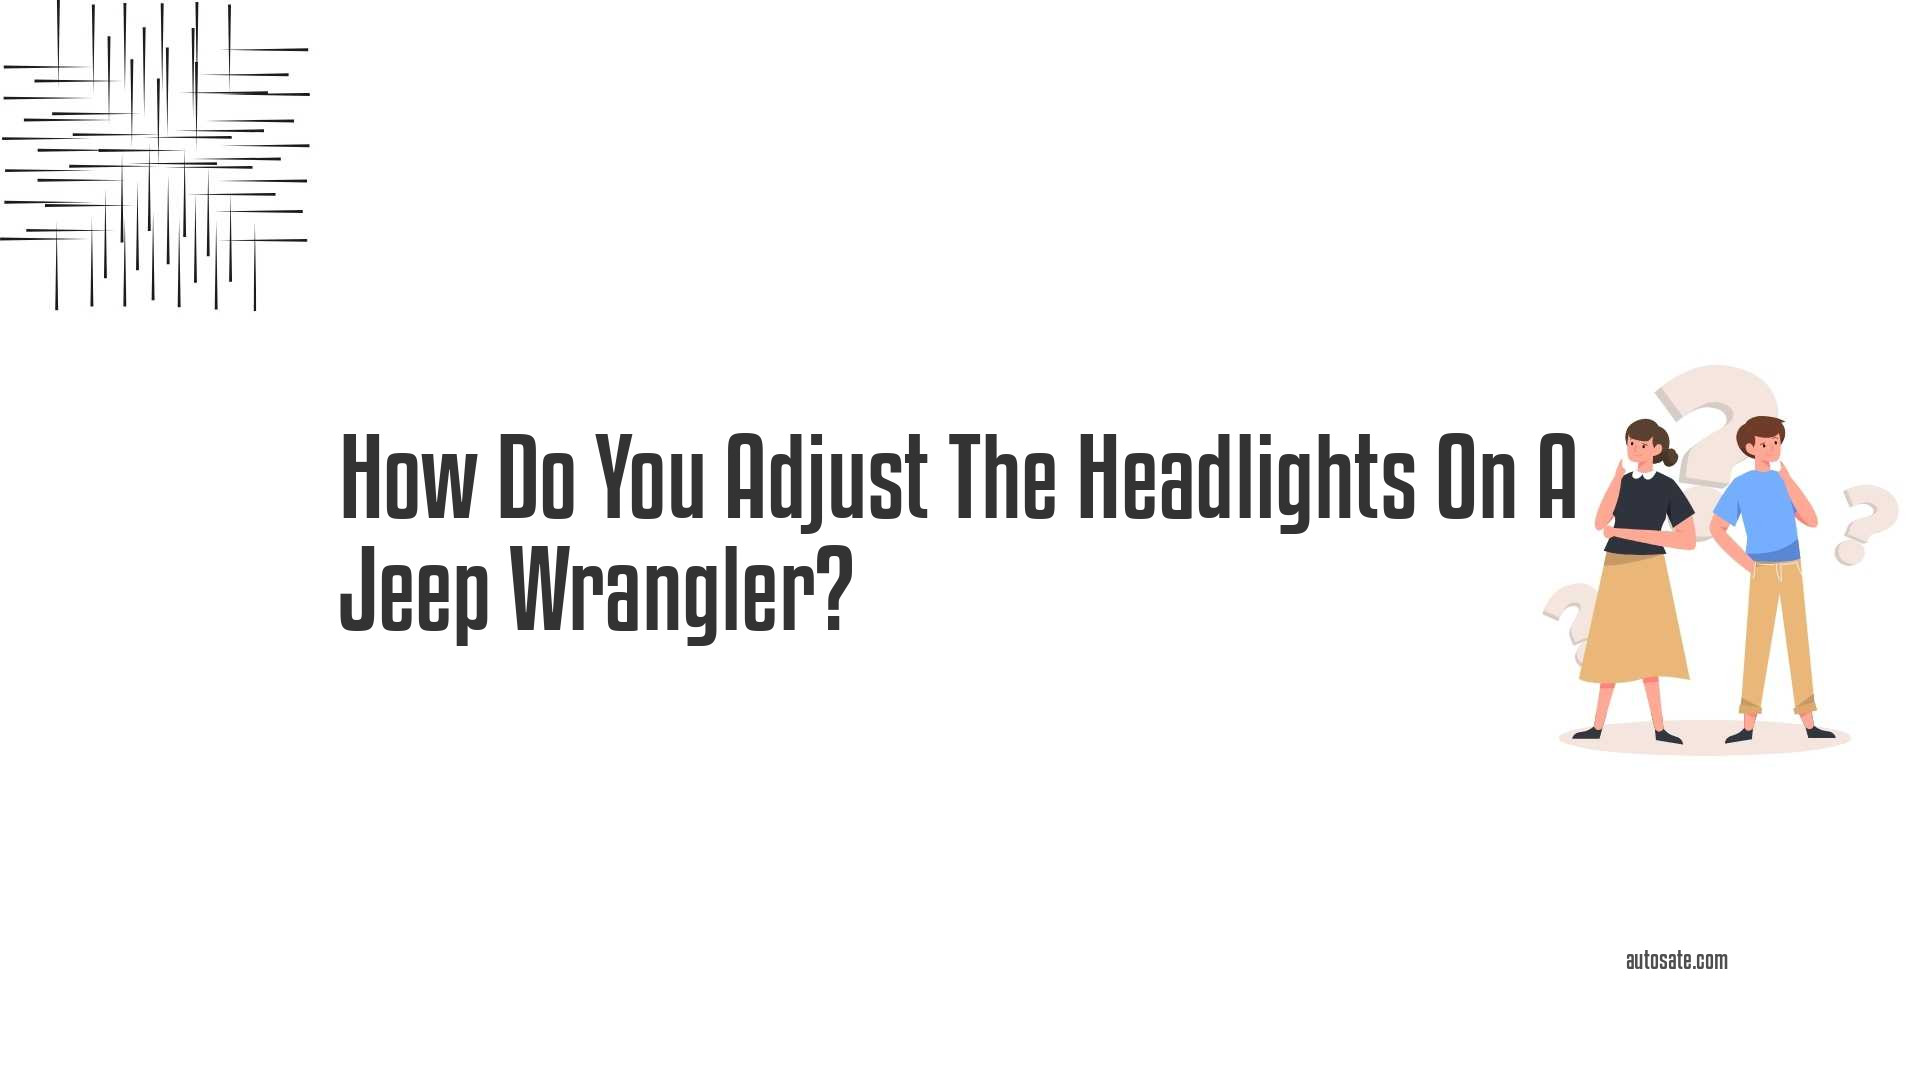 How Do You Adjust The Headlights On A Jeep Wrangler?